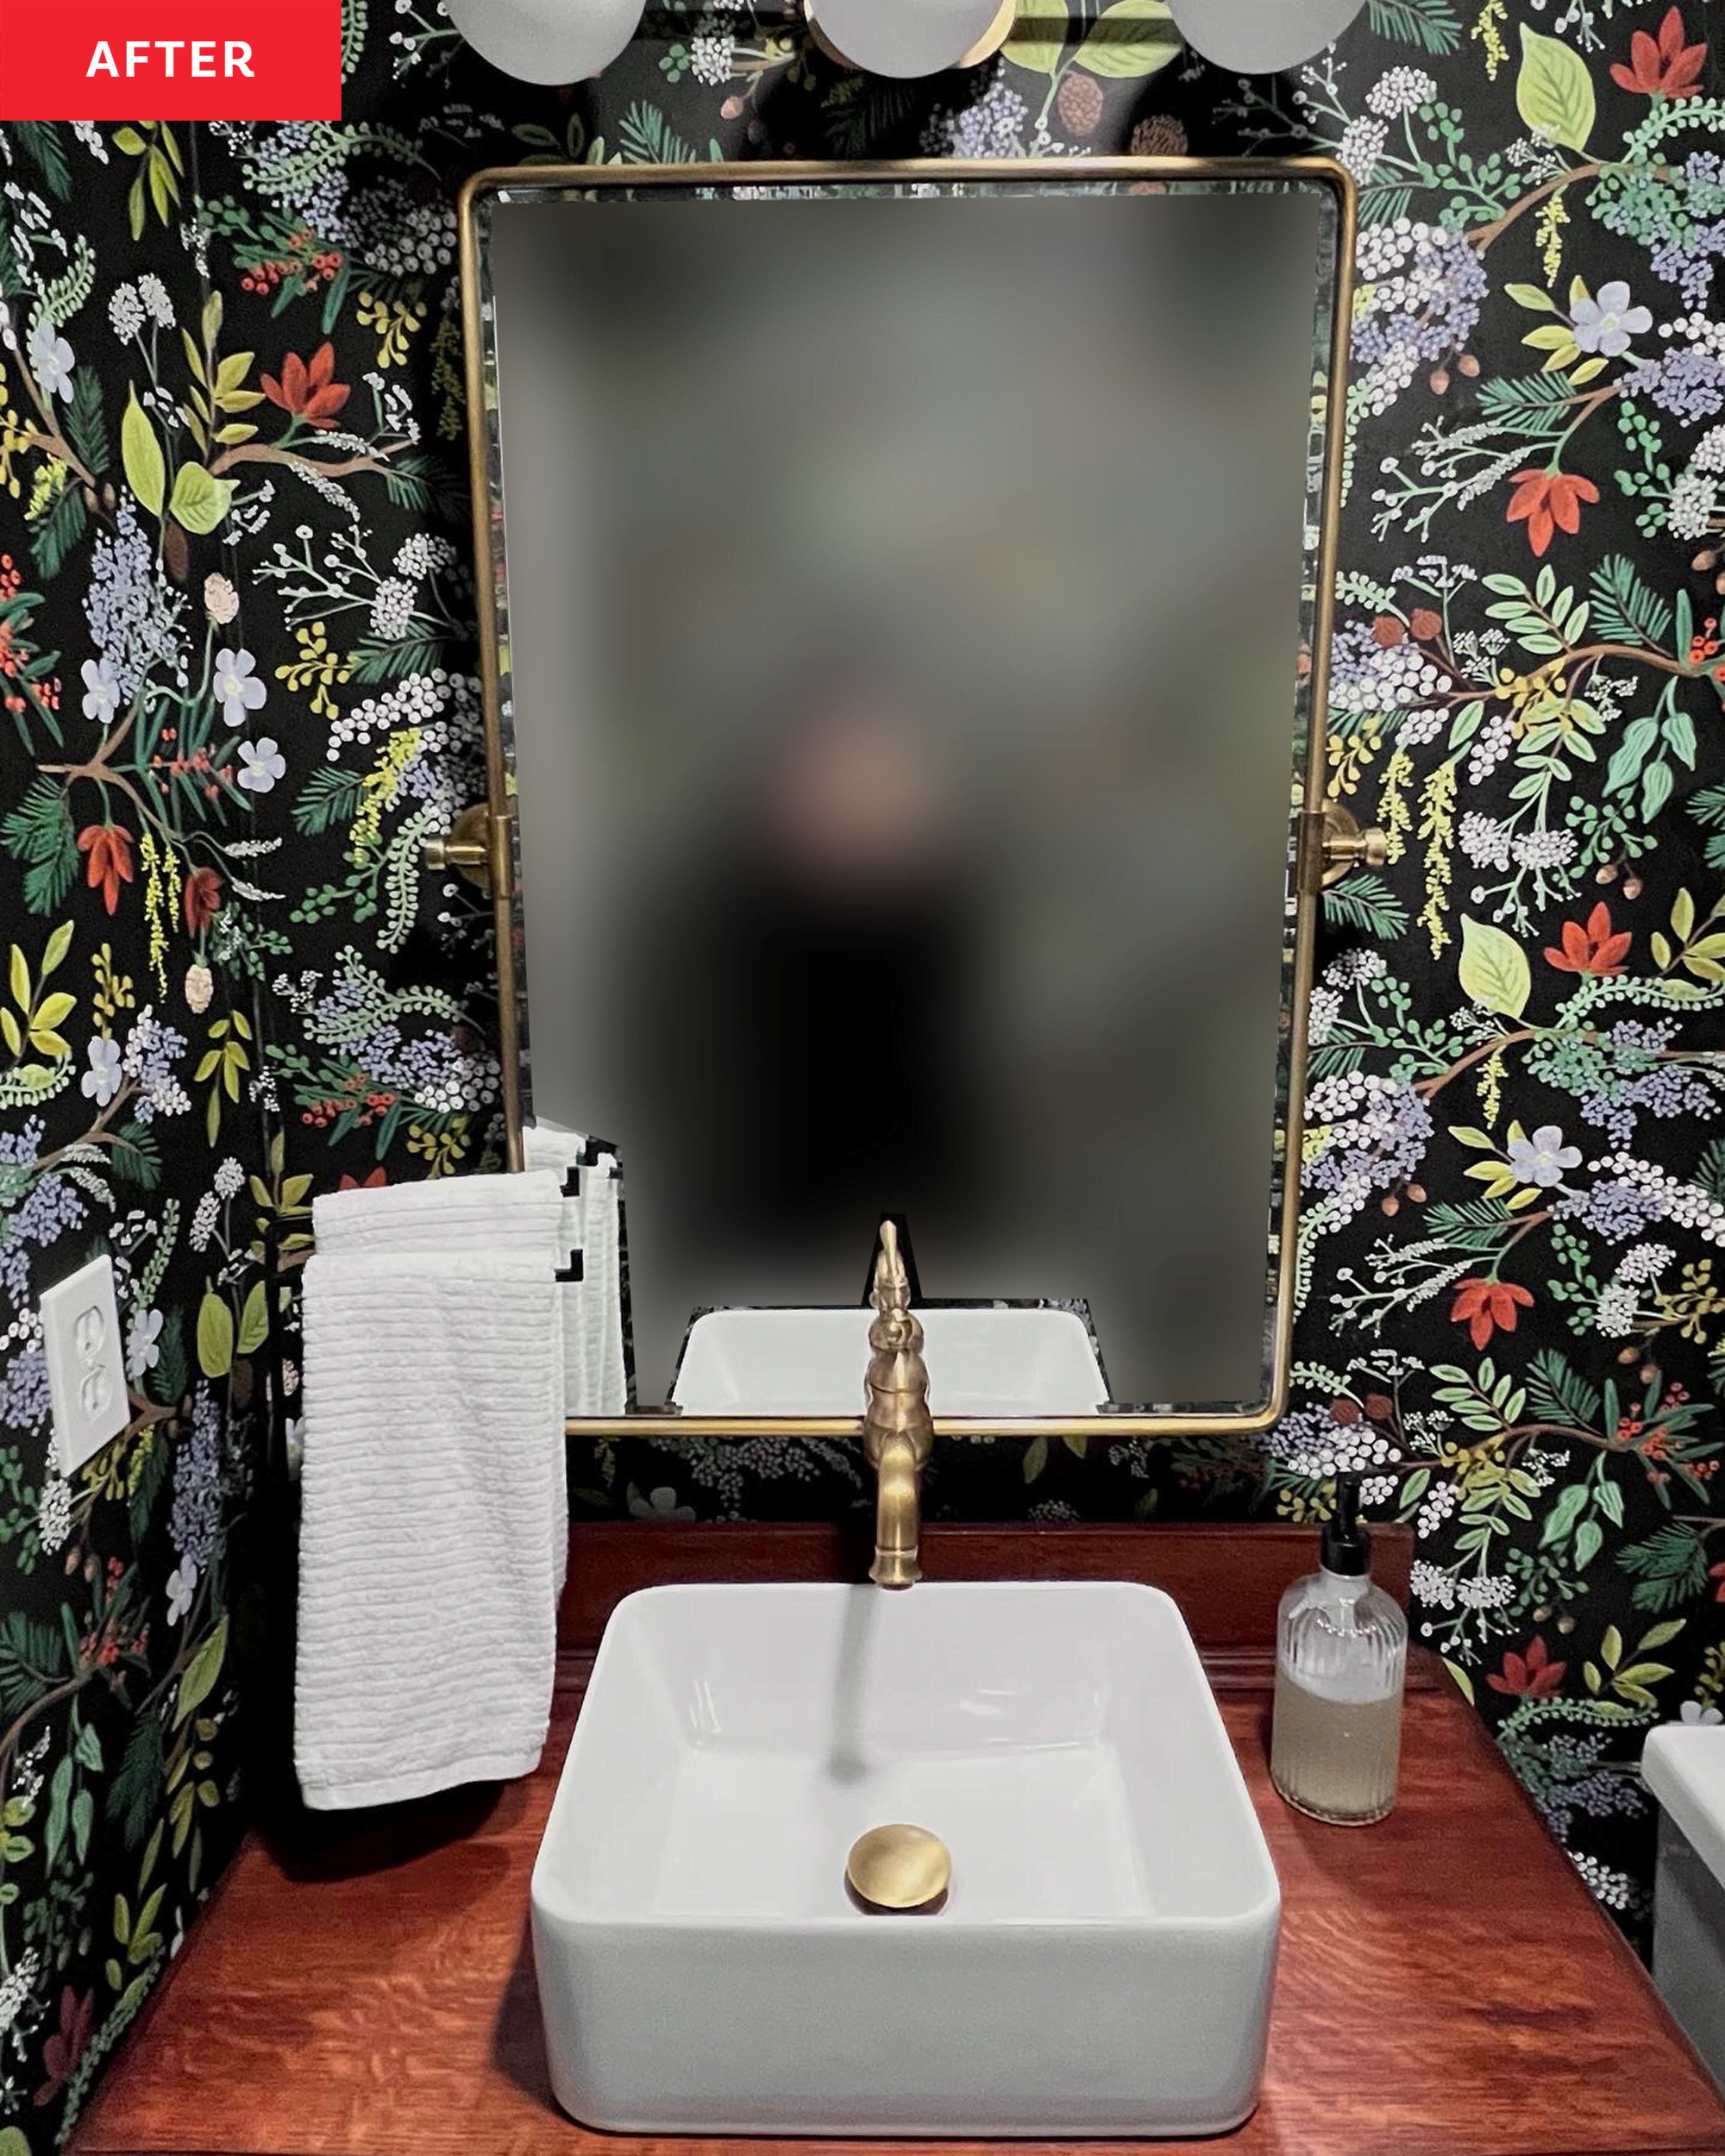 Wallpaper Boulevard  Black crocodile skin  wallpaper hung in bathroom  httpswwwwallpaperboulevardcomproductcrocodileskin18041aspx   Facebook